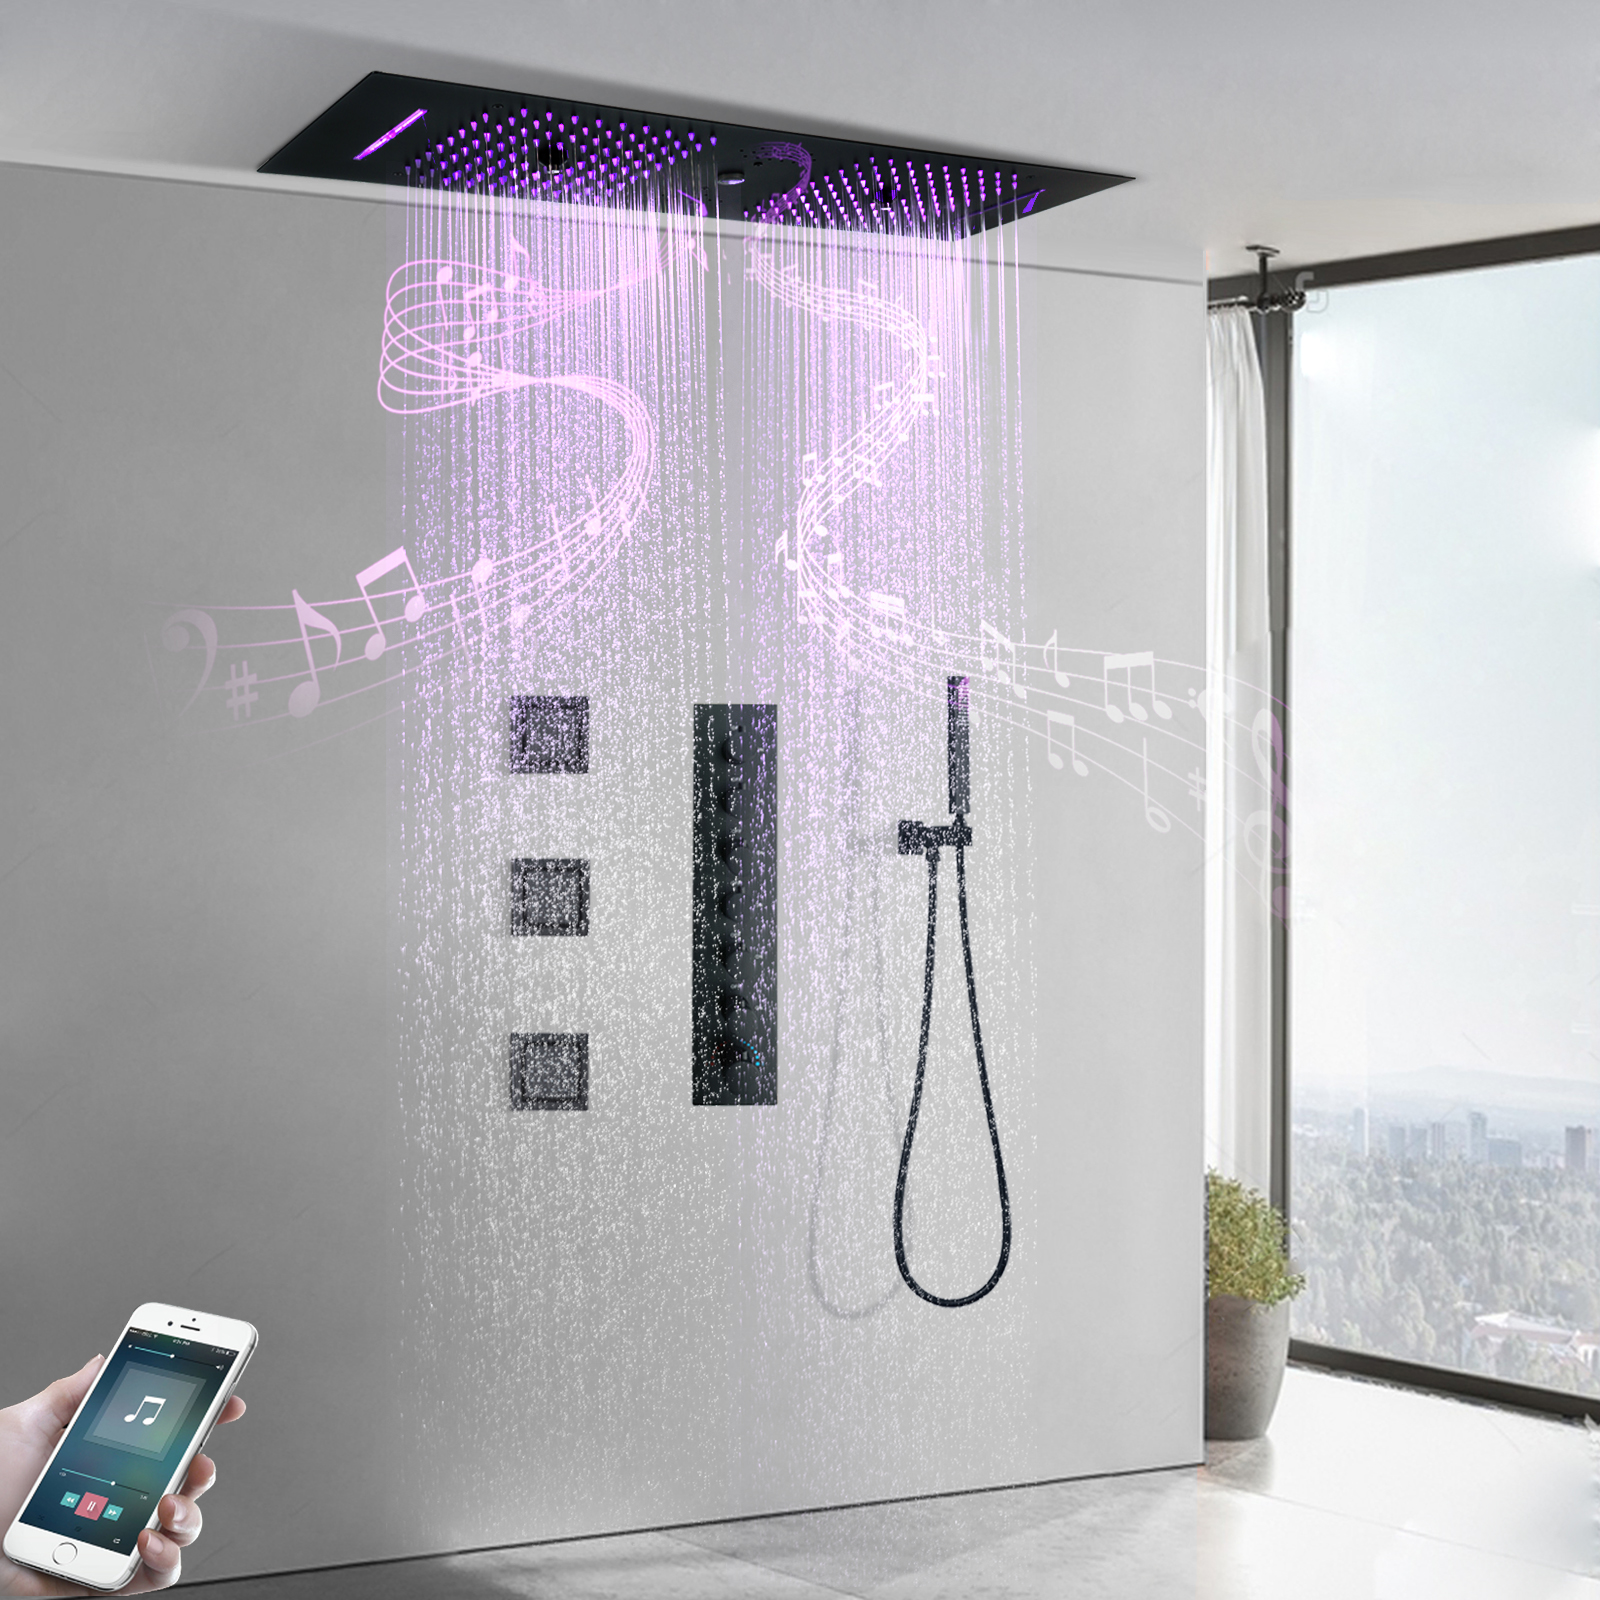 Bathroom Hidden Rain Shower Faucet Ceiling Mounted Constant Temperature Color Rain Shower Waterfall Sprinkler Head